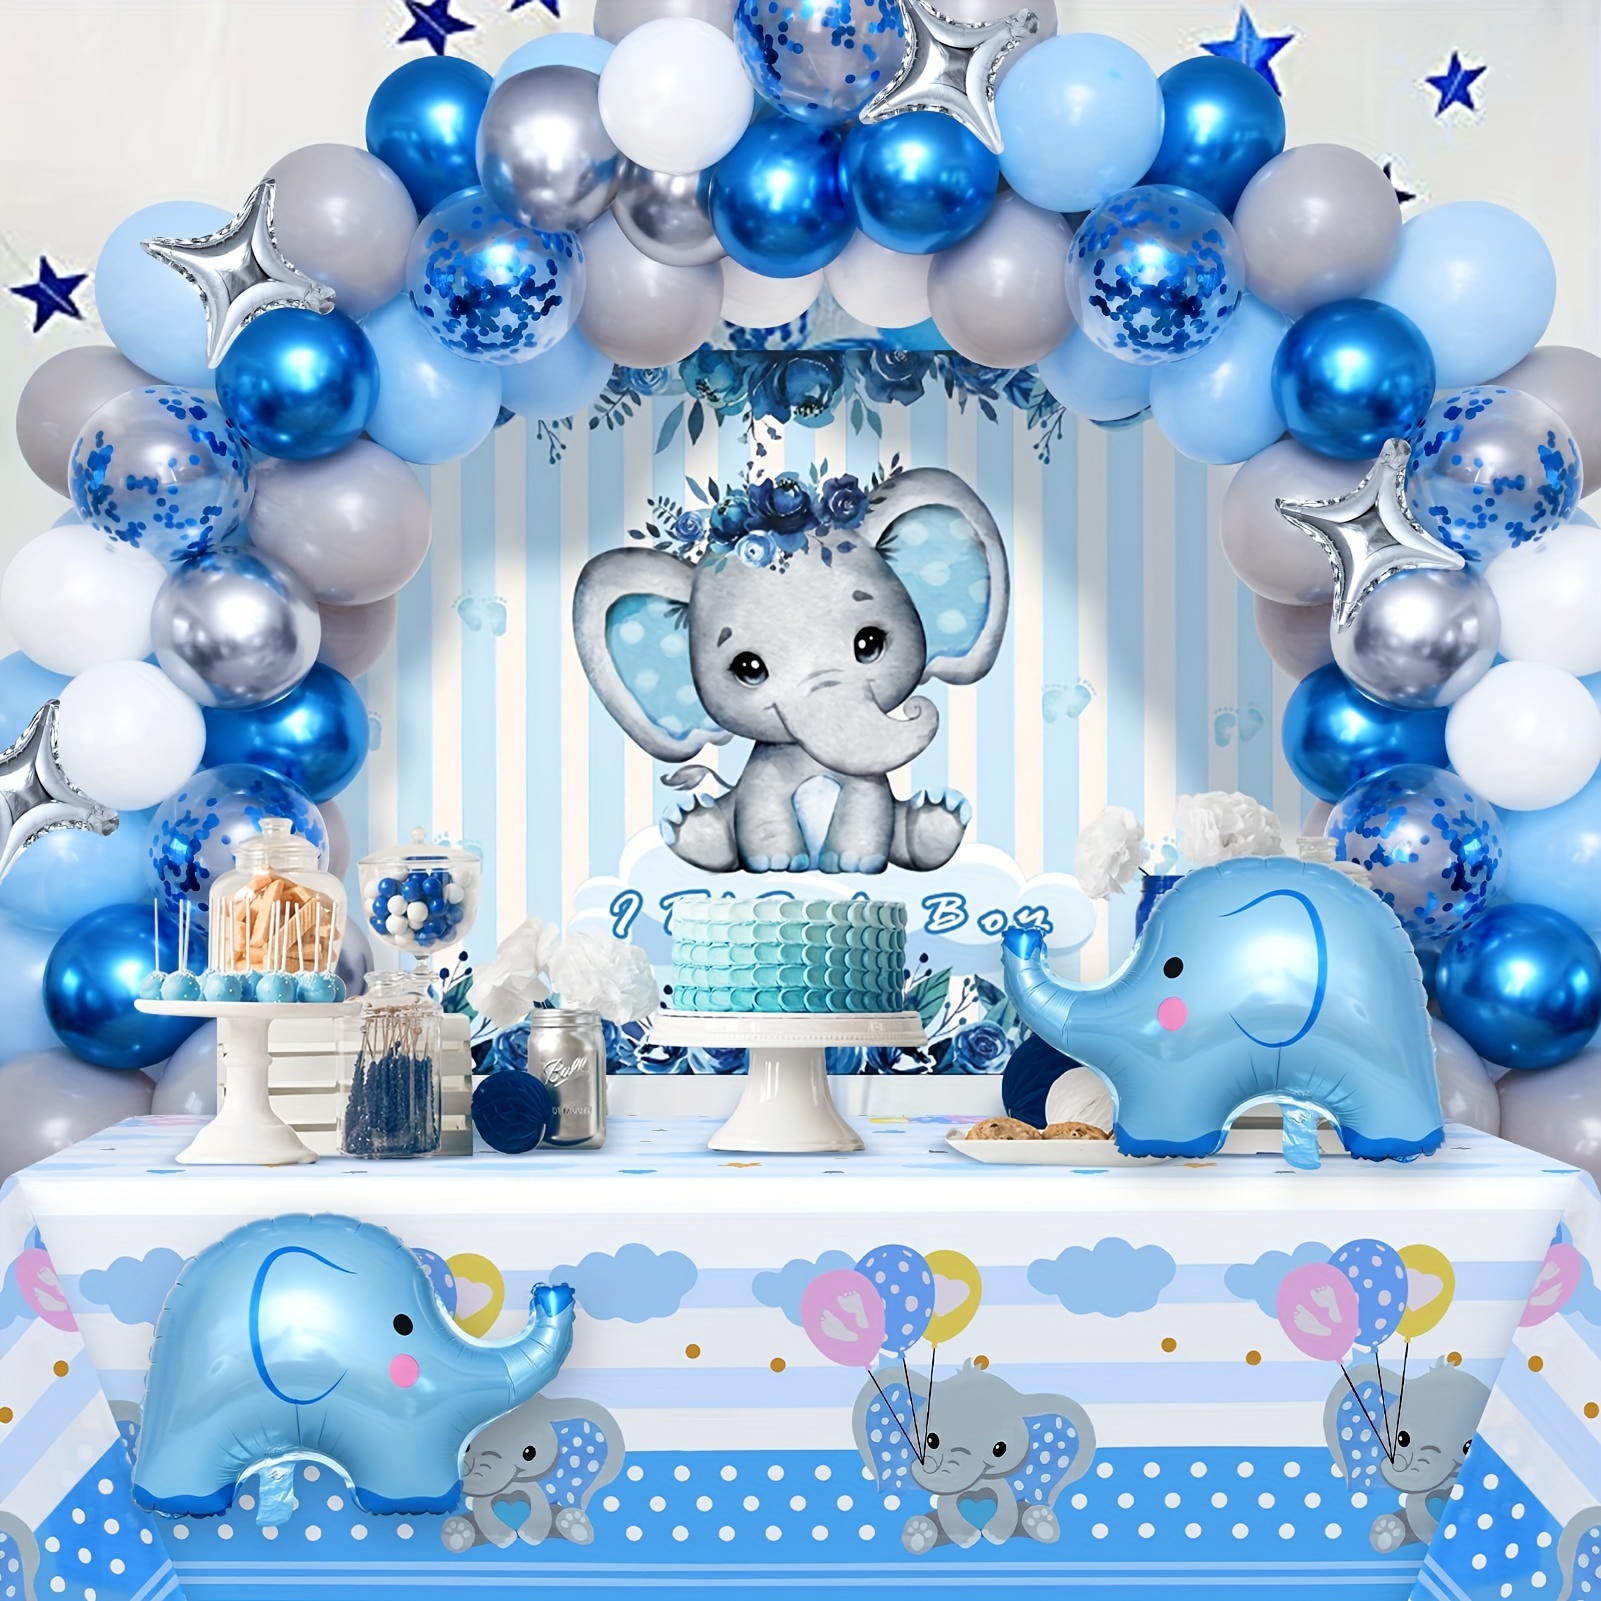 Decoraciones de baby shower para niño, kit de arco de globos azul marino de  diferentes tamaños, 4 cajas con letras para baby shower, decoraciones de